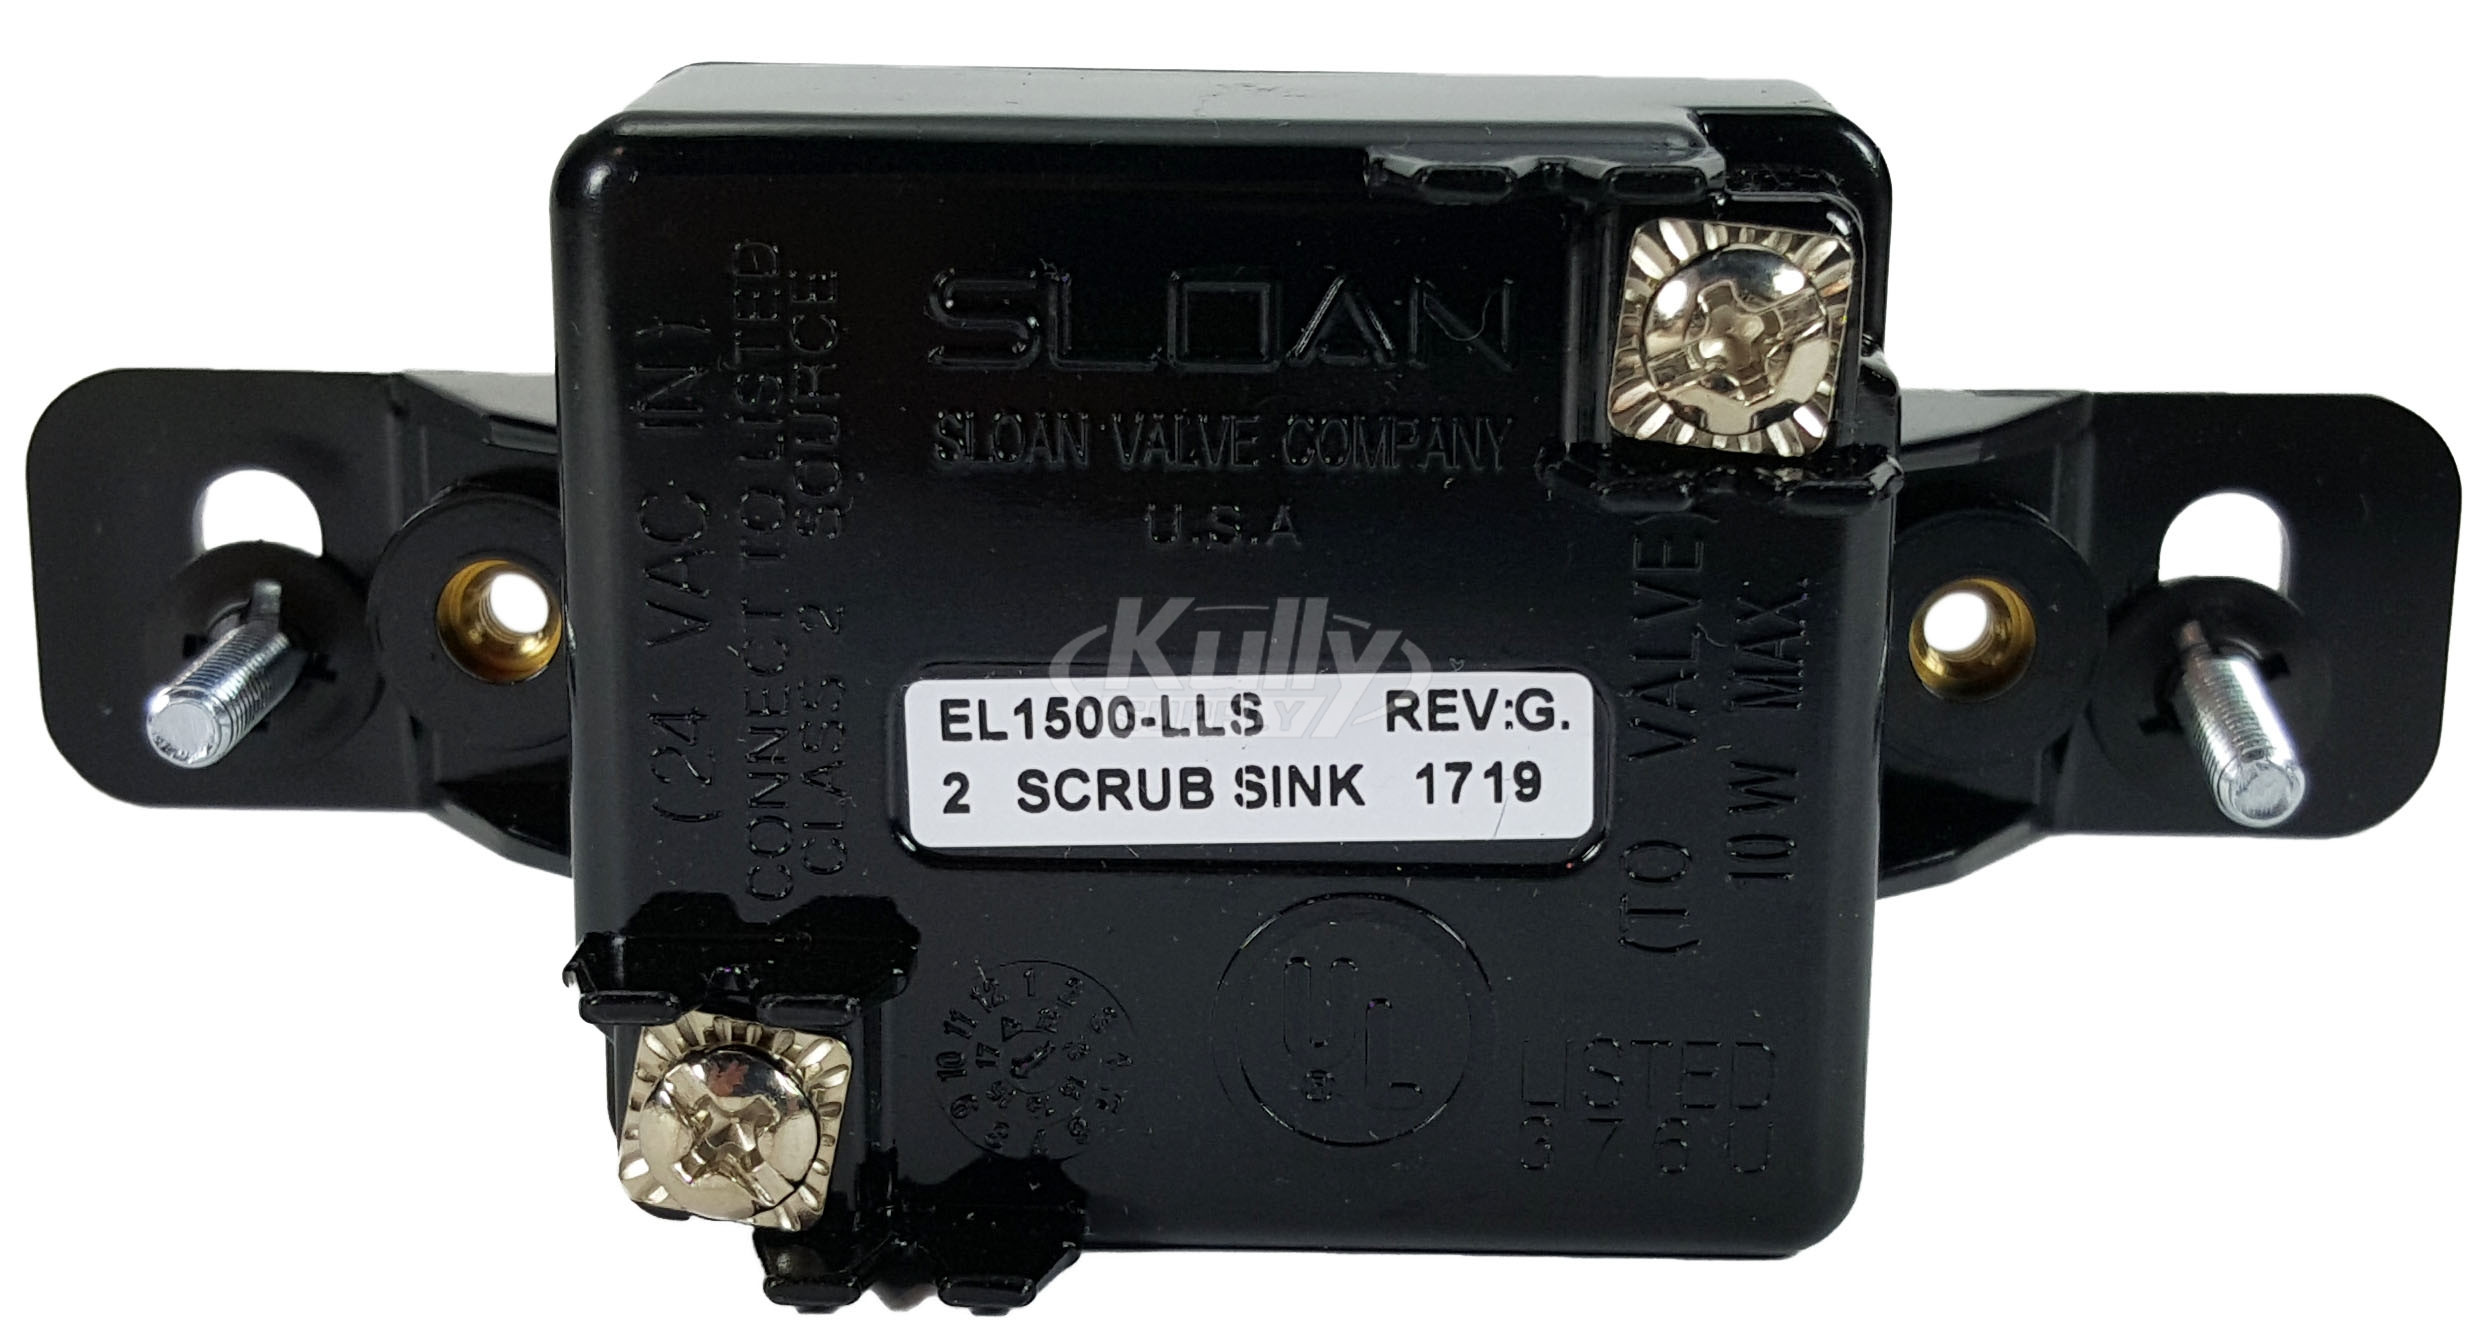 Sloan EL-1500-LLS Sensor - Scrub Sink